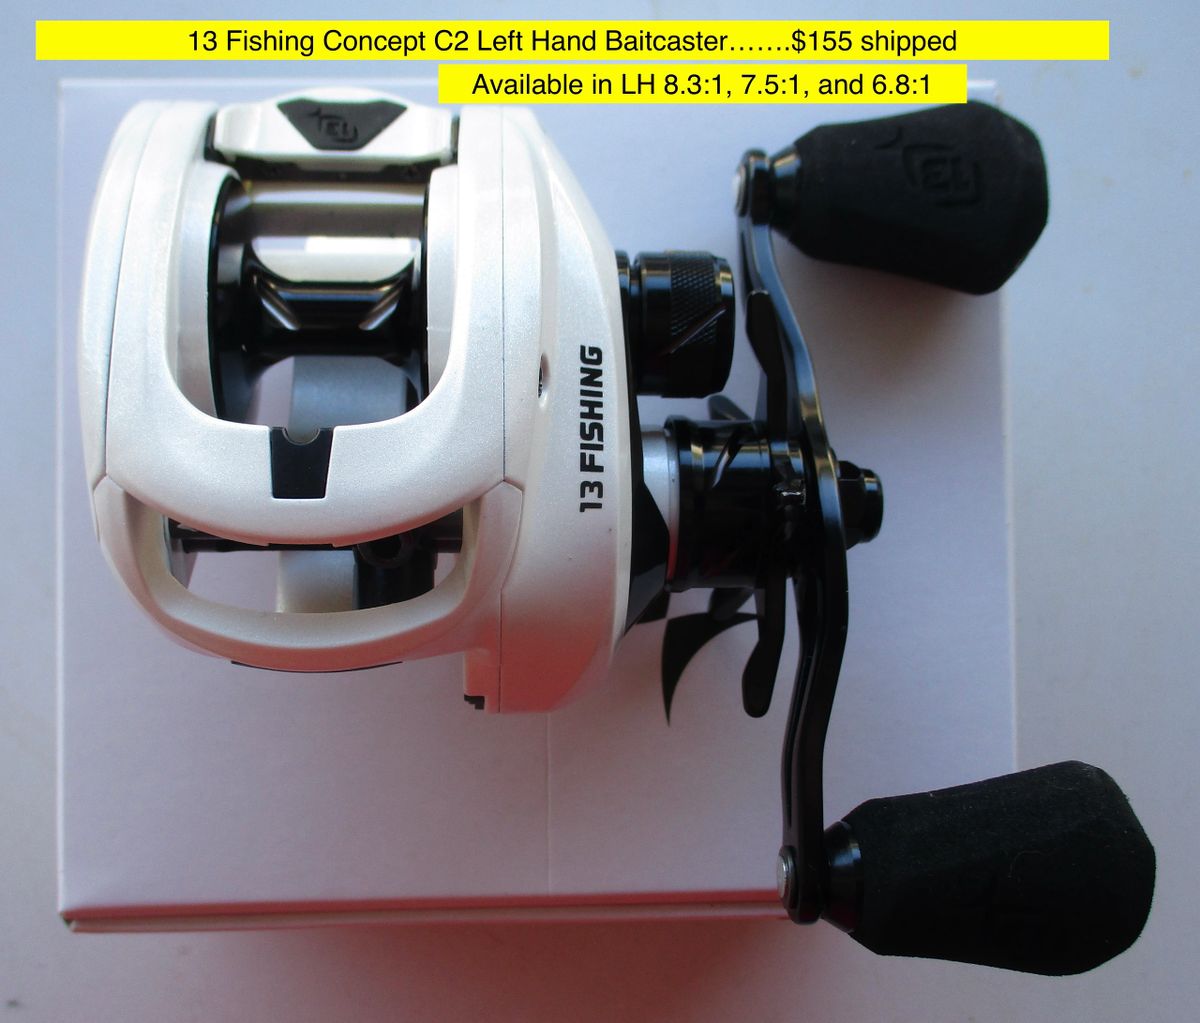 13 Fishing Concept C2 Left Hand Baitcaster (9 Bearings, 8.3:1 ratio)